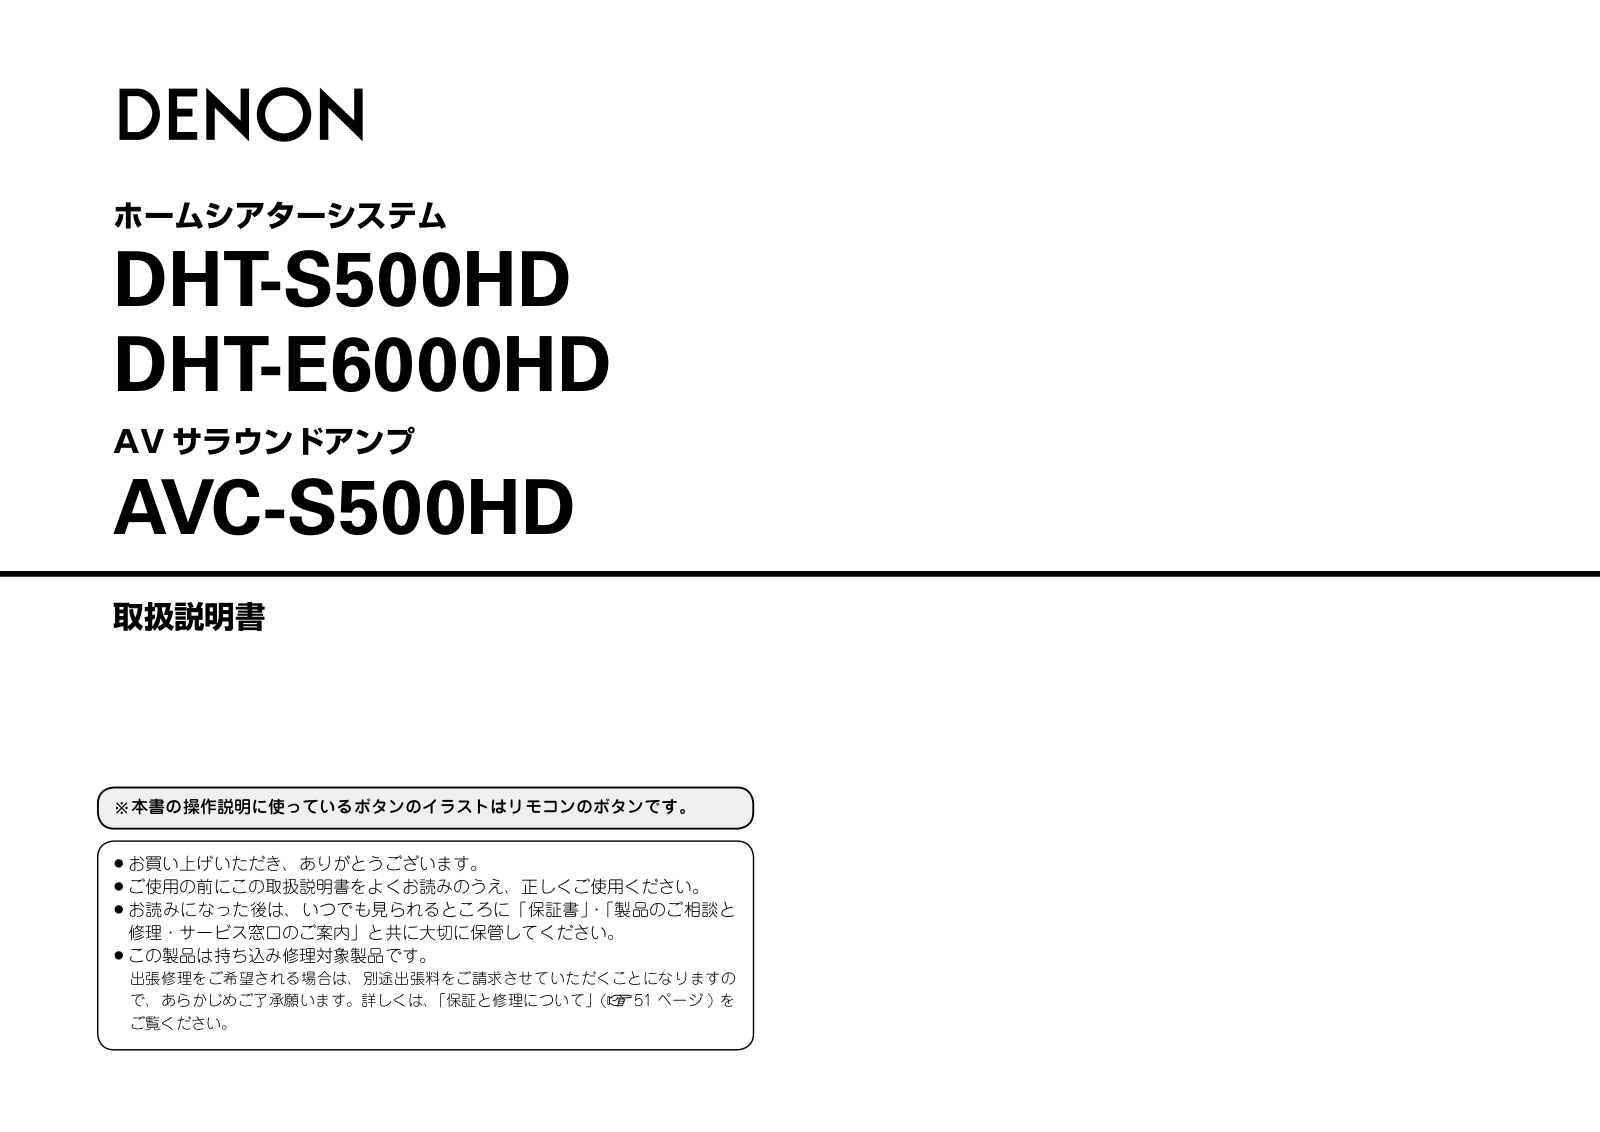 Denon DHT-S500HD, DHT-E6000HD, AVC-S500HD Owner's Manual